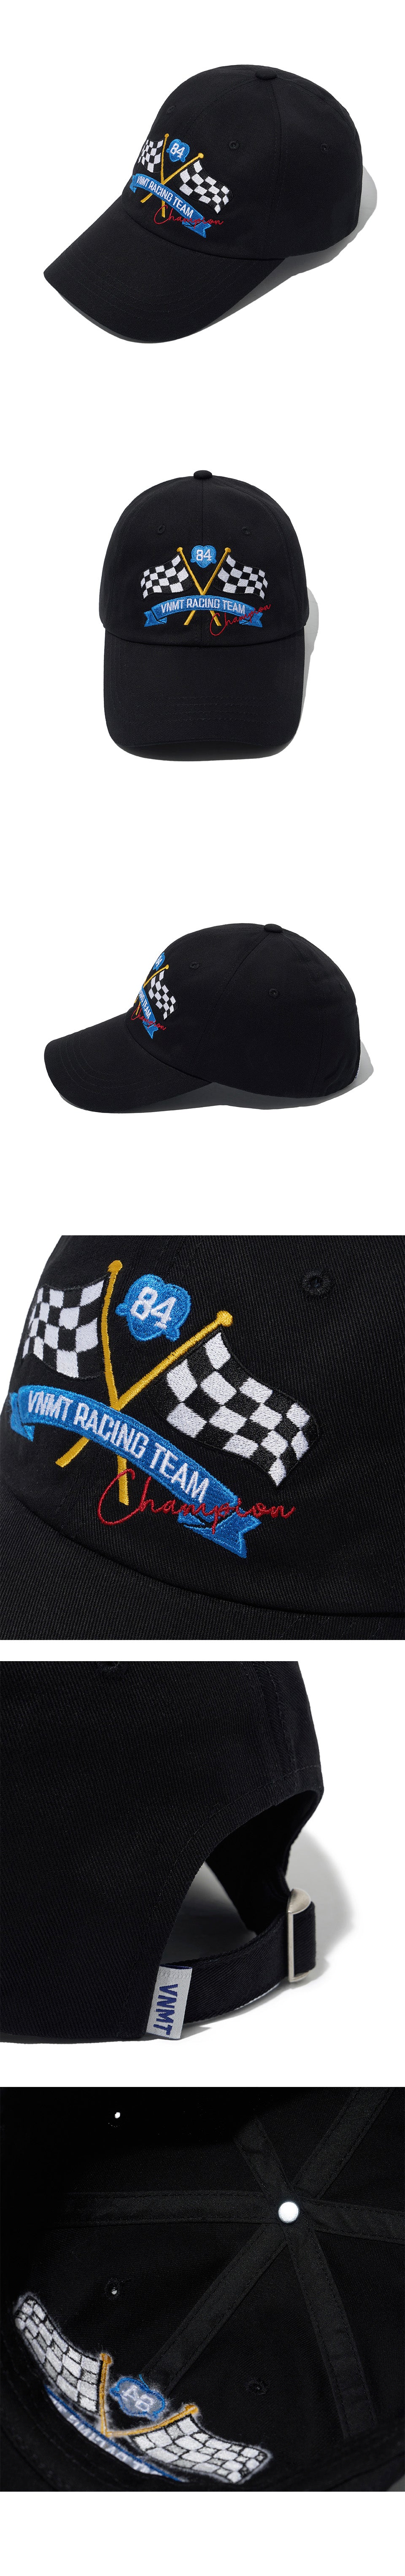 VNMT racing team ballcap_black